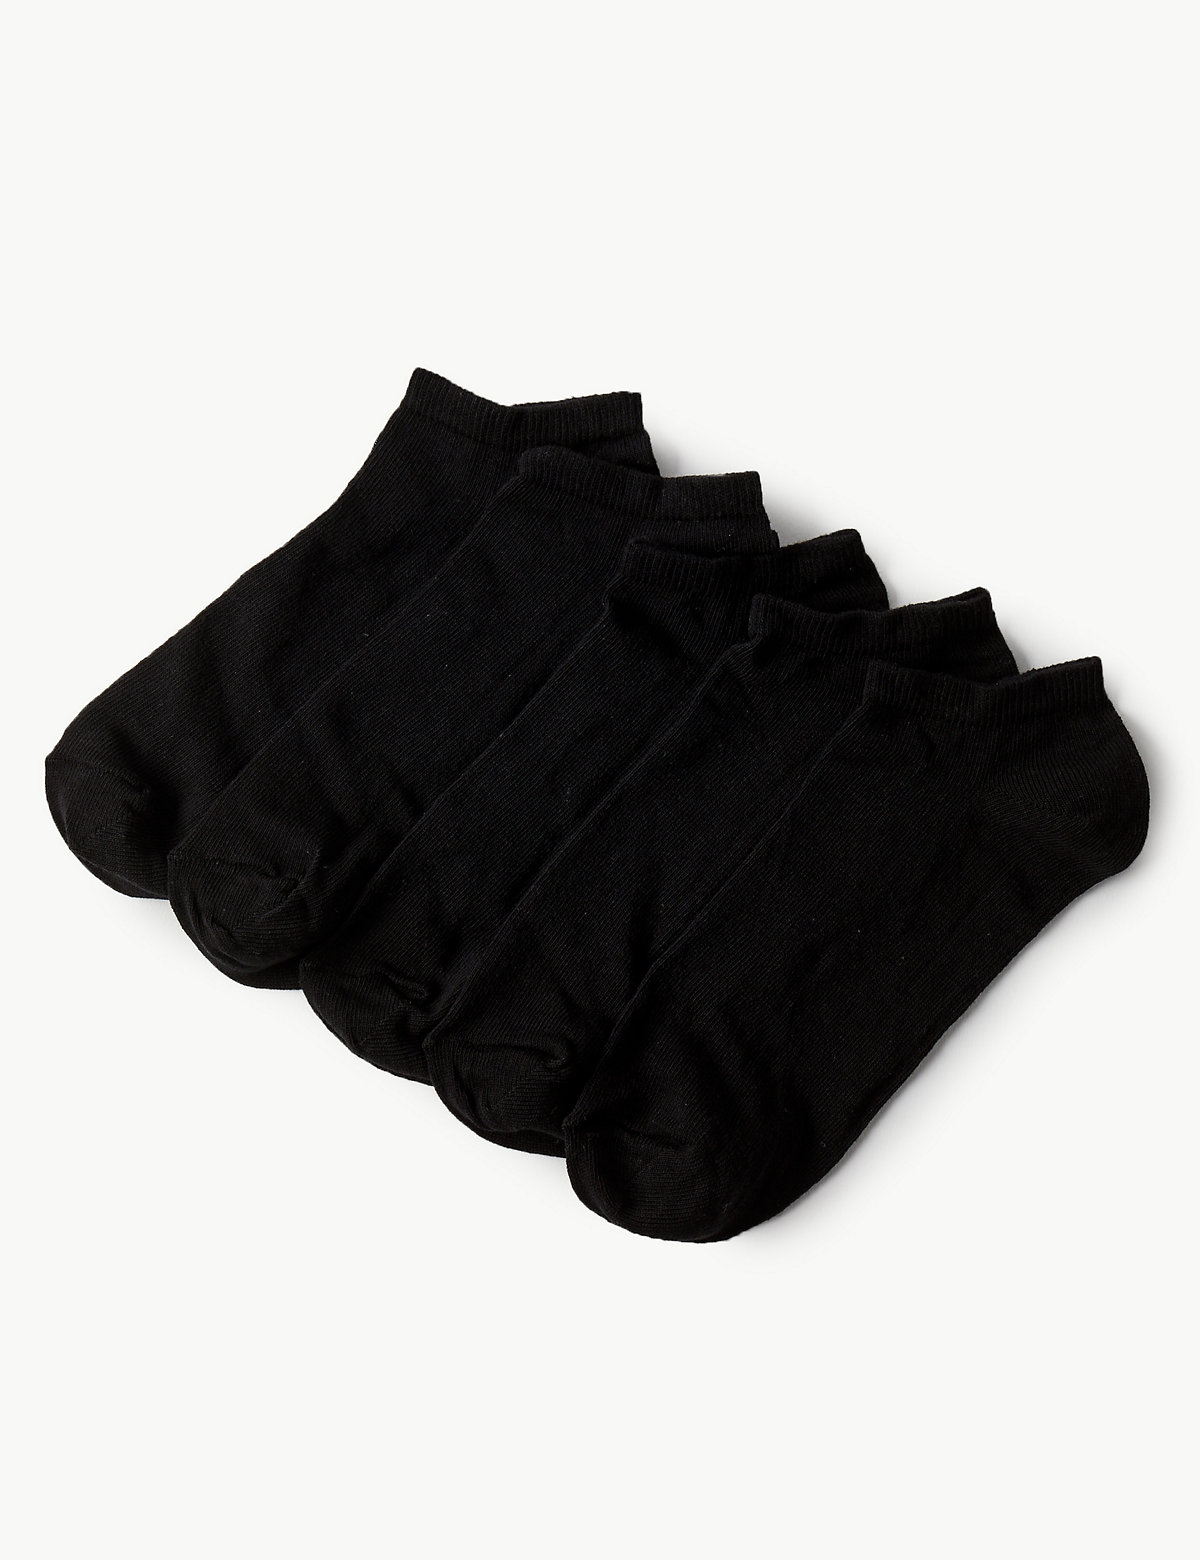 5pk Cotton Rich Trainer Liner Socks™